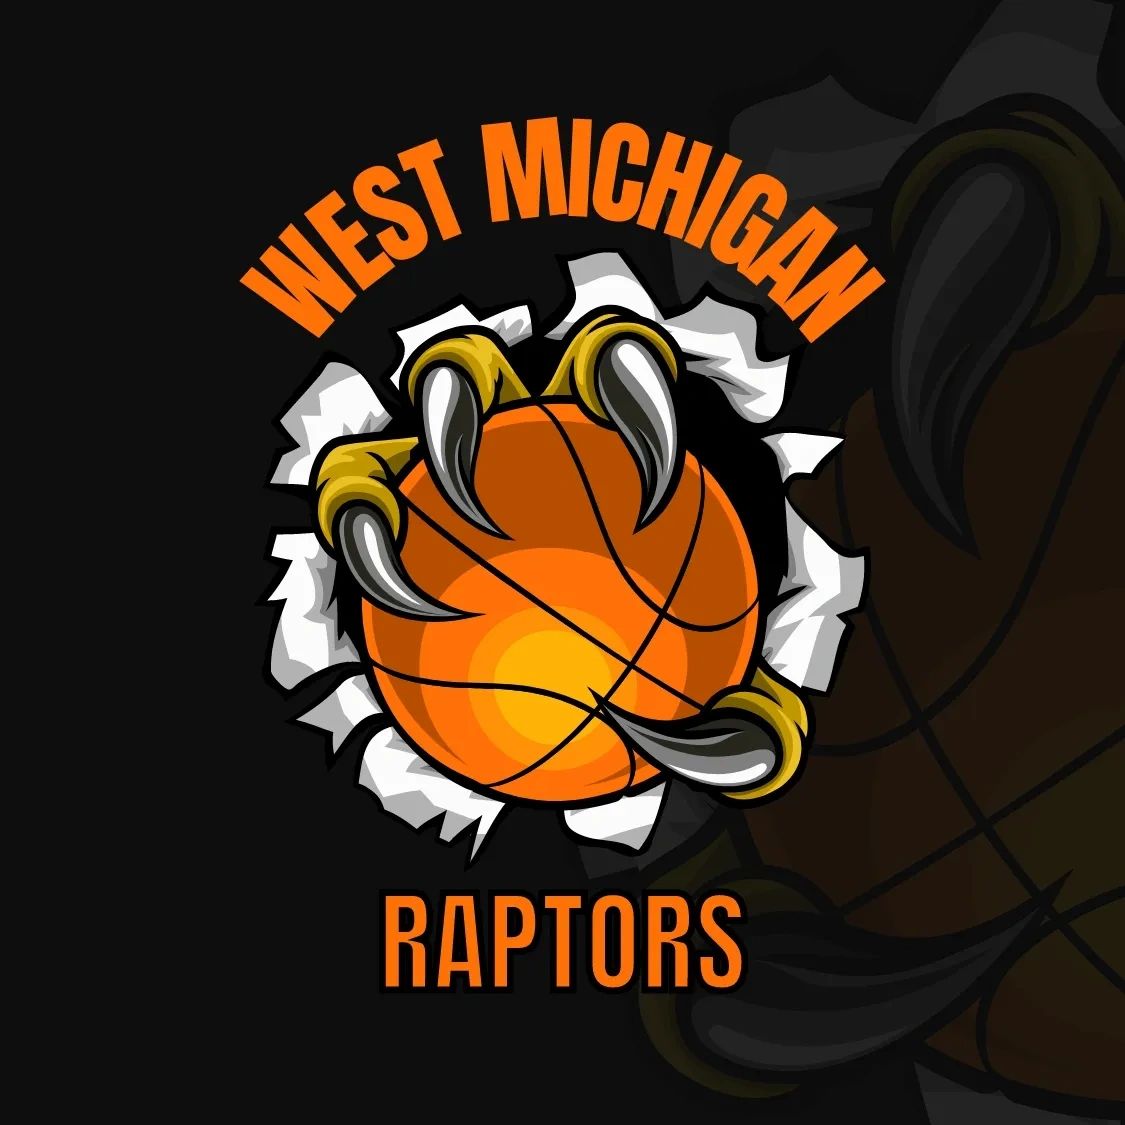 west michigan travel basketball teams